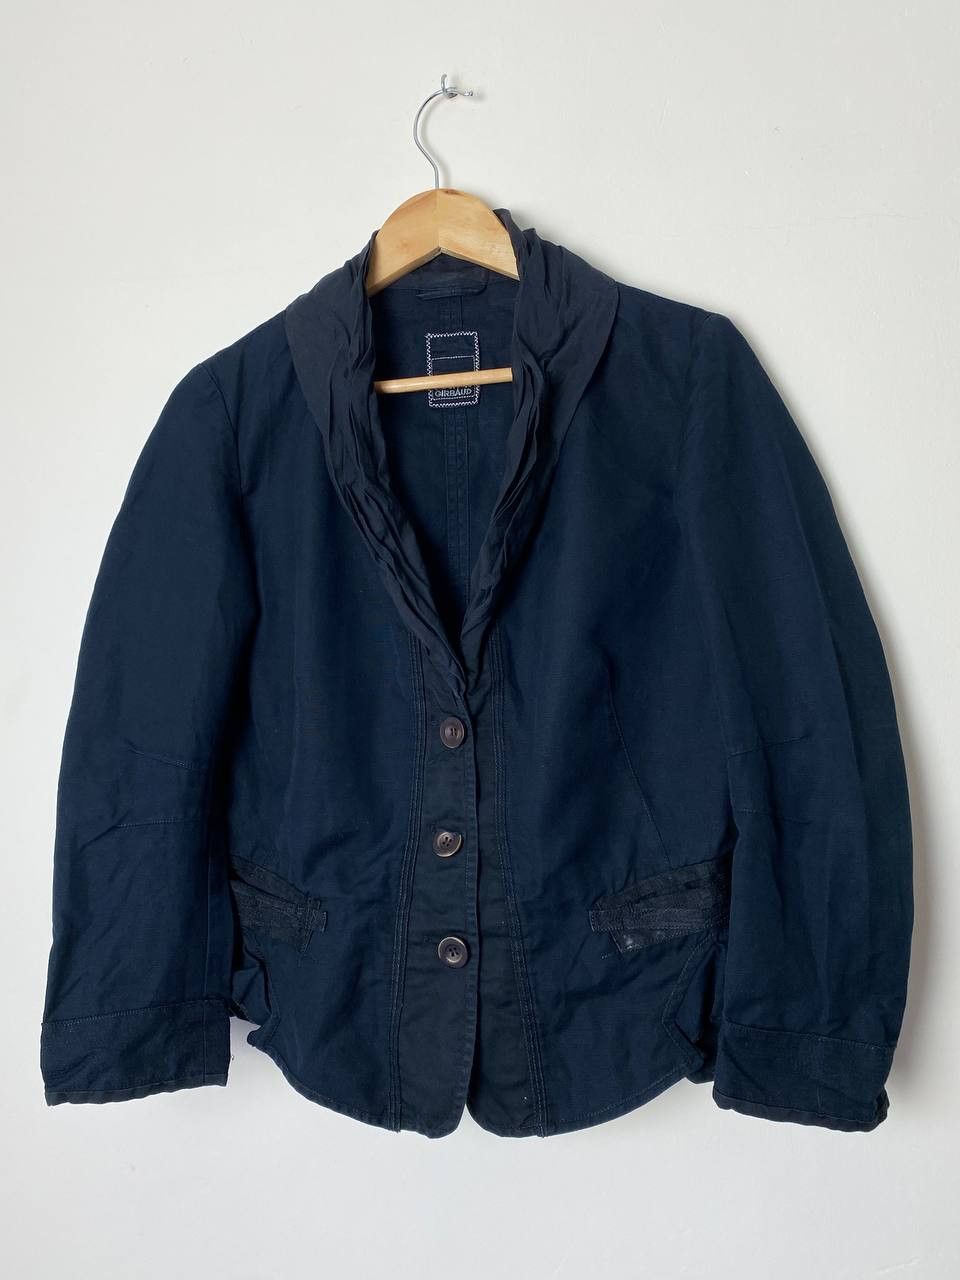 Vintage Vintage Marithe Francois Girbaud Blazer Jacket | Grailed